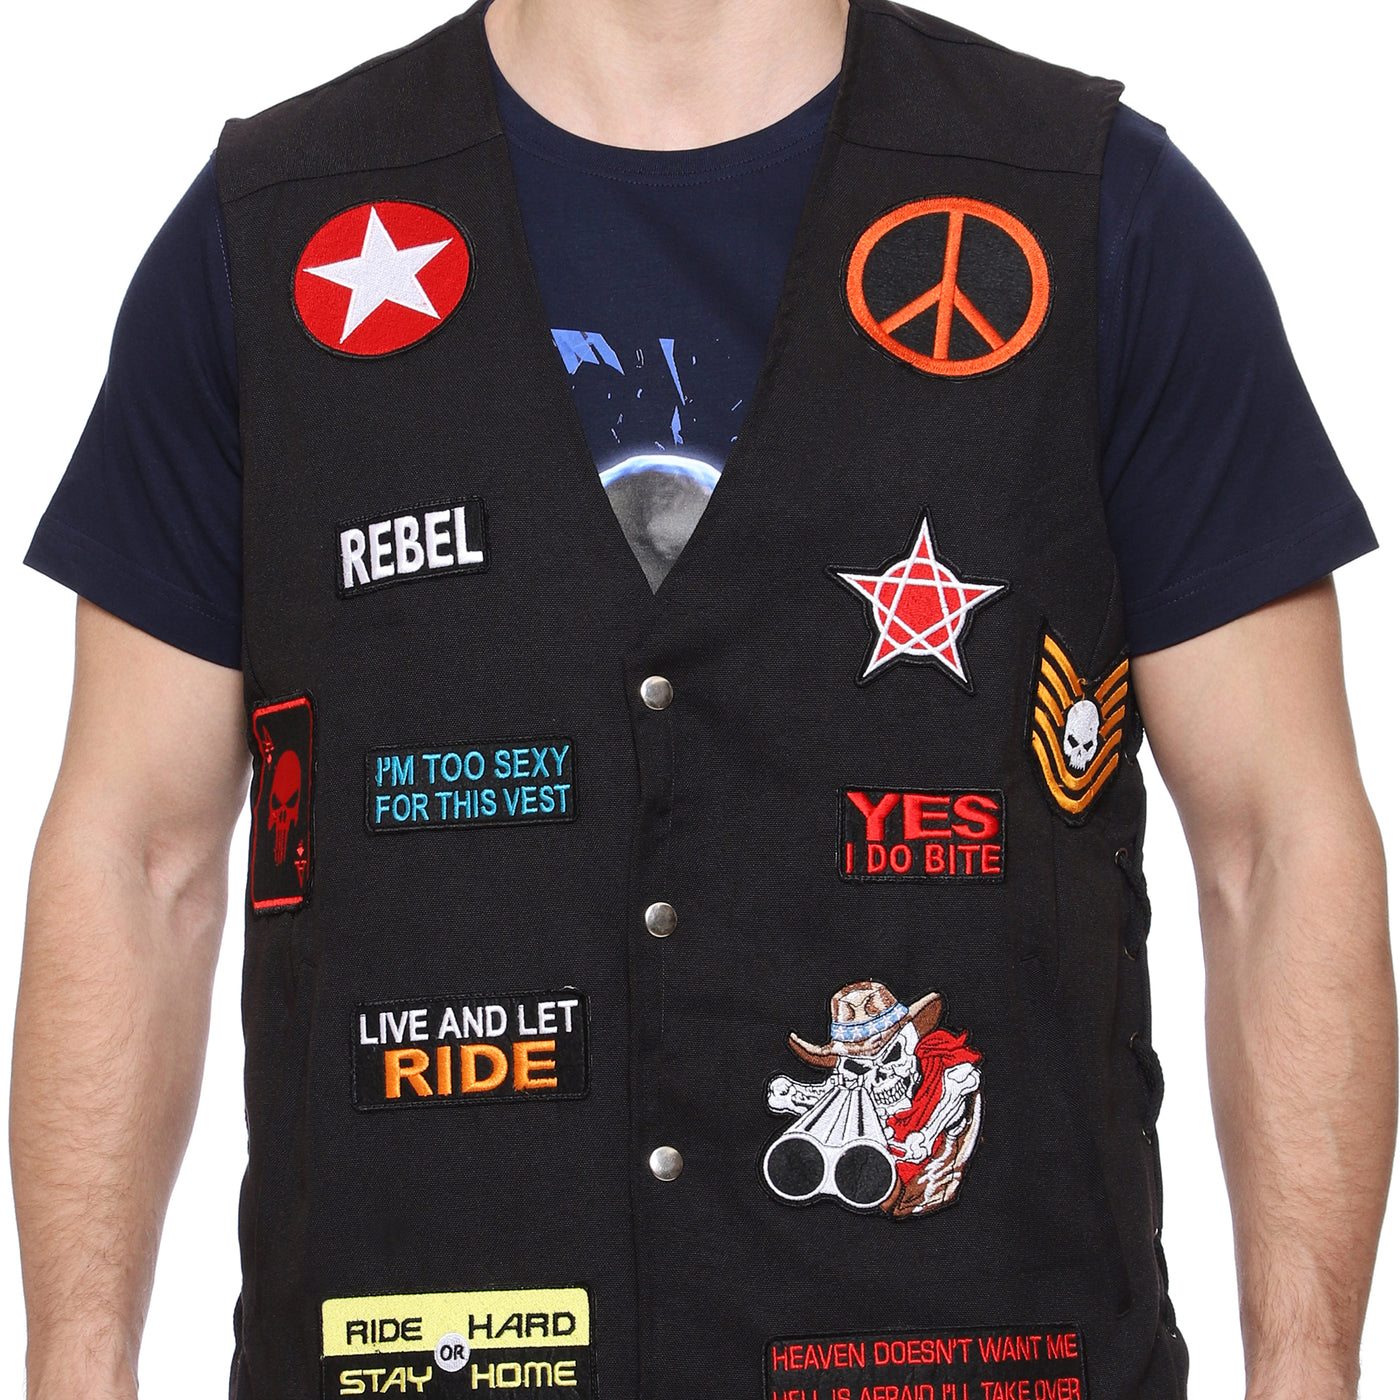 Patched Biker vest, leather vest,Motorcycle vests rider jackets,patches jacket, Bullet vest online india best biker t shirts